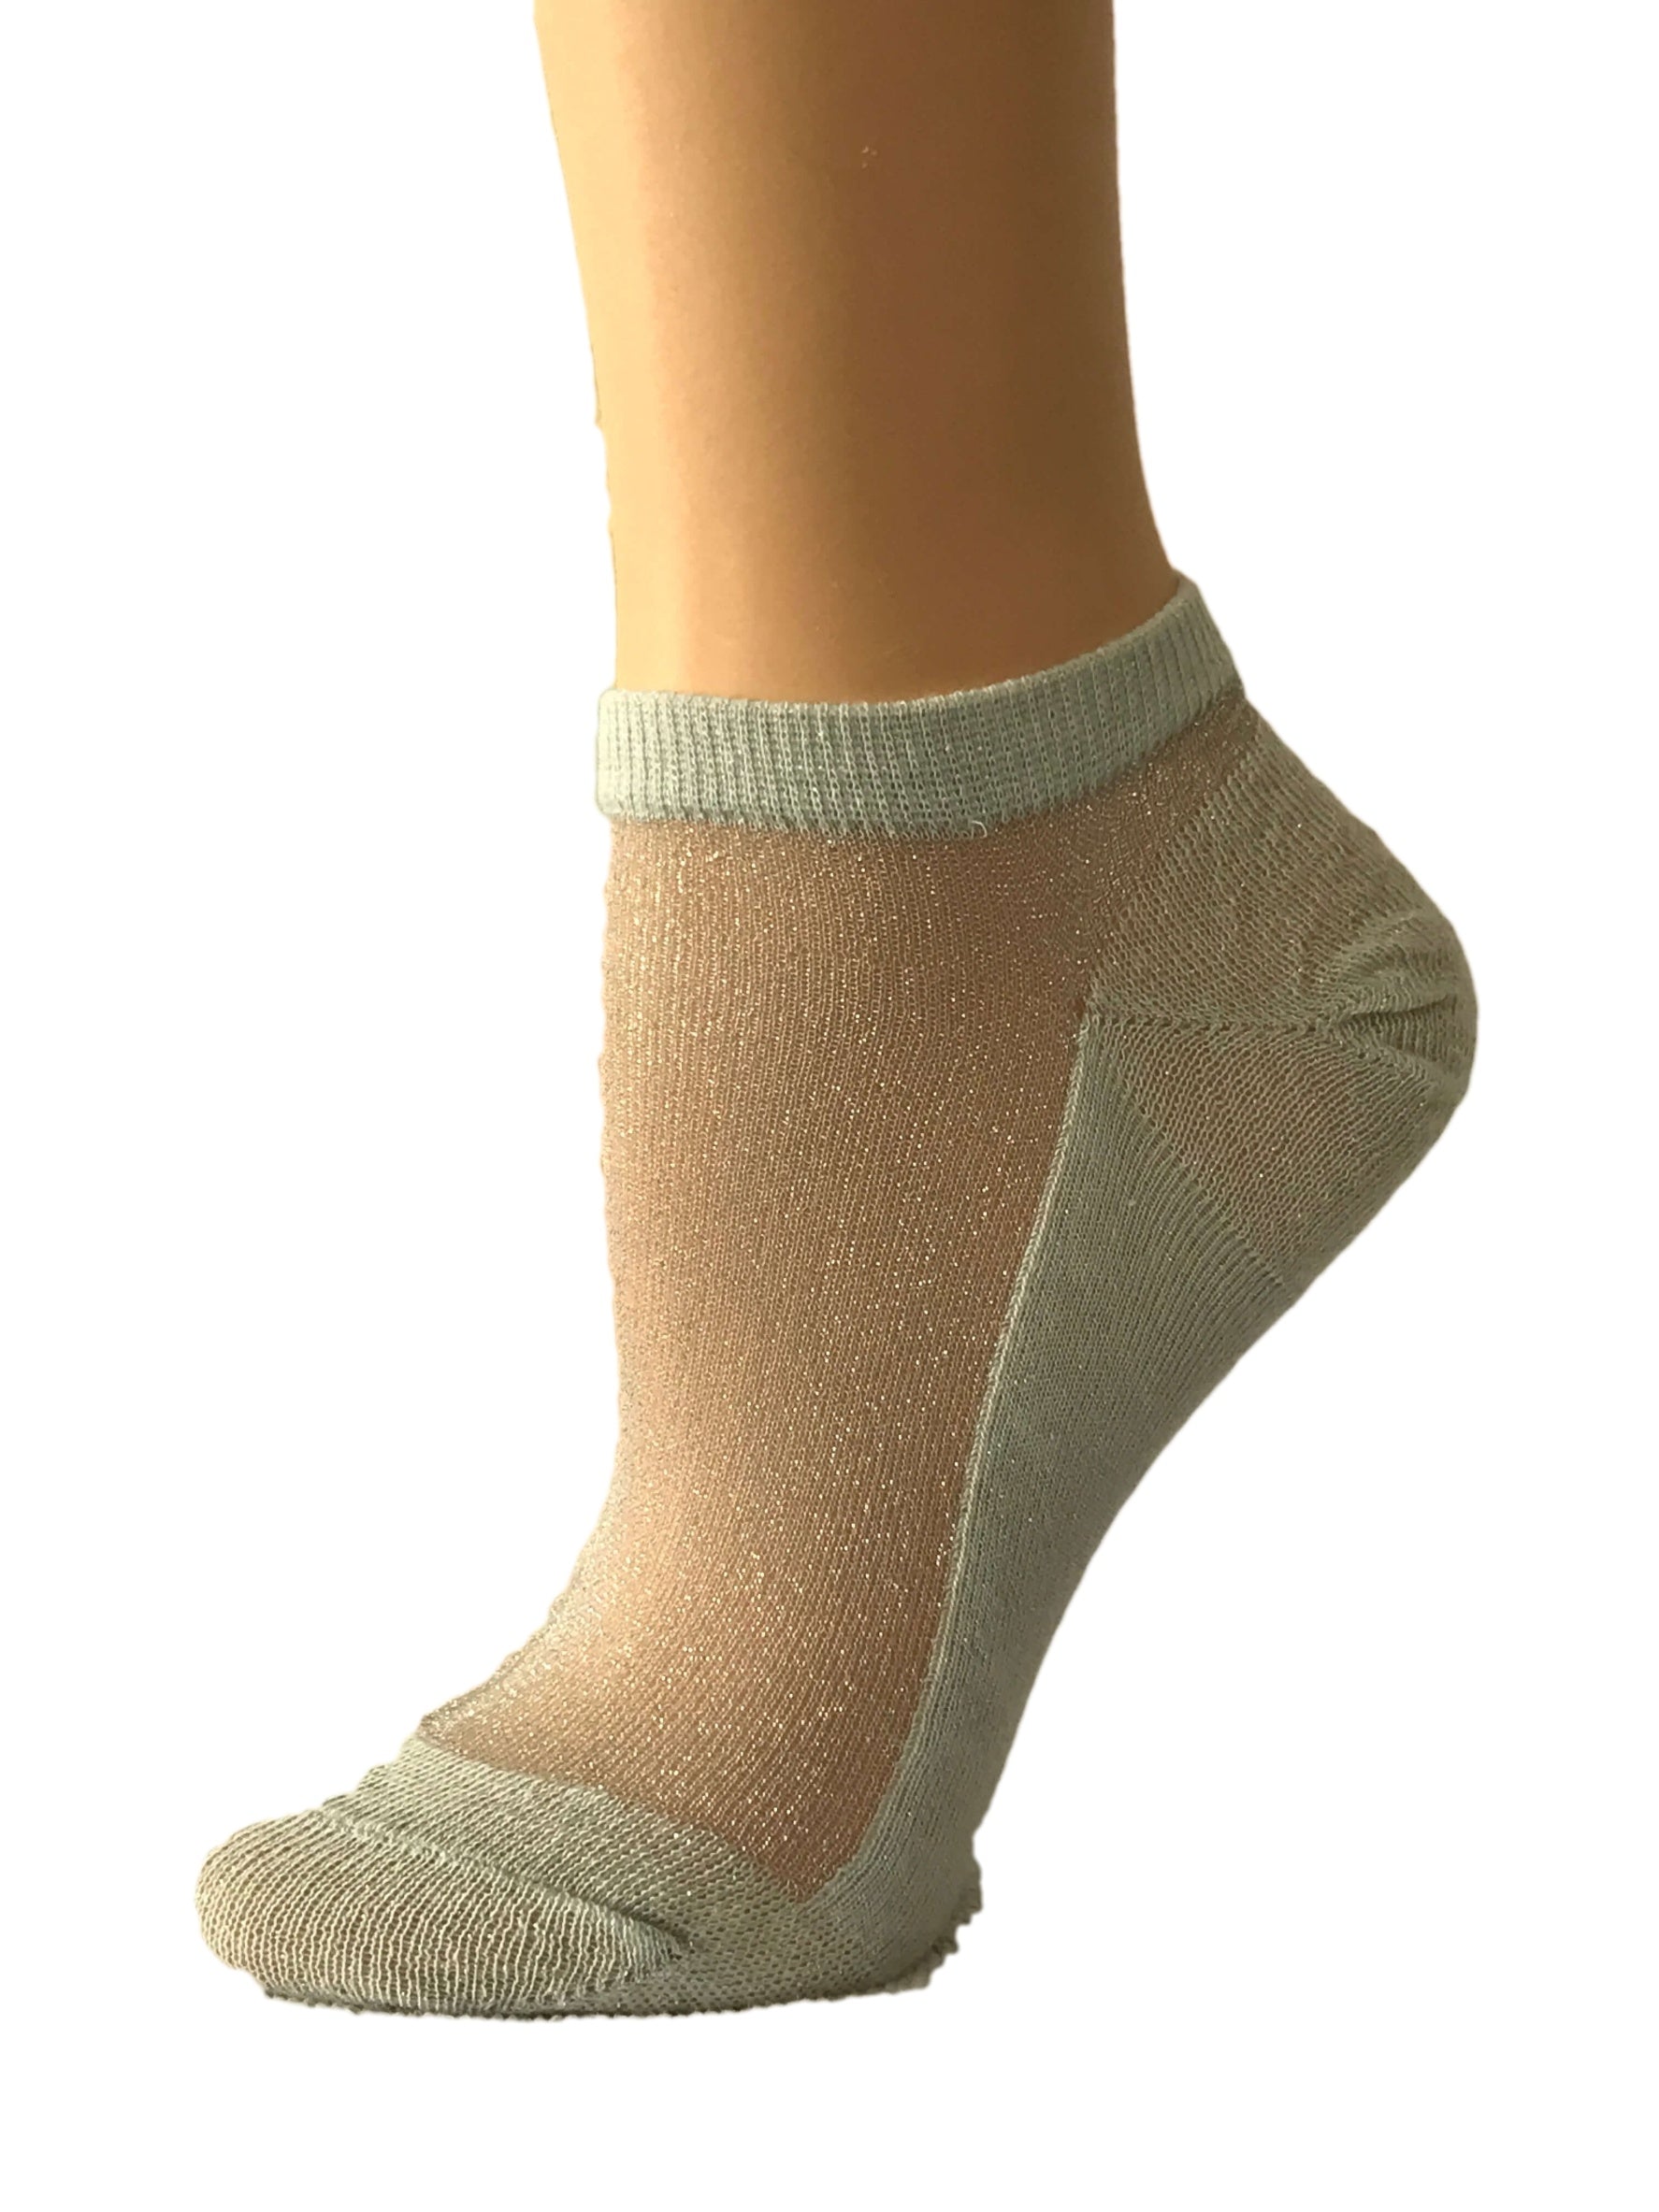 Glowing Light Green Ankle Sheer Socks - Global Trendz Fashion®